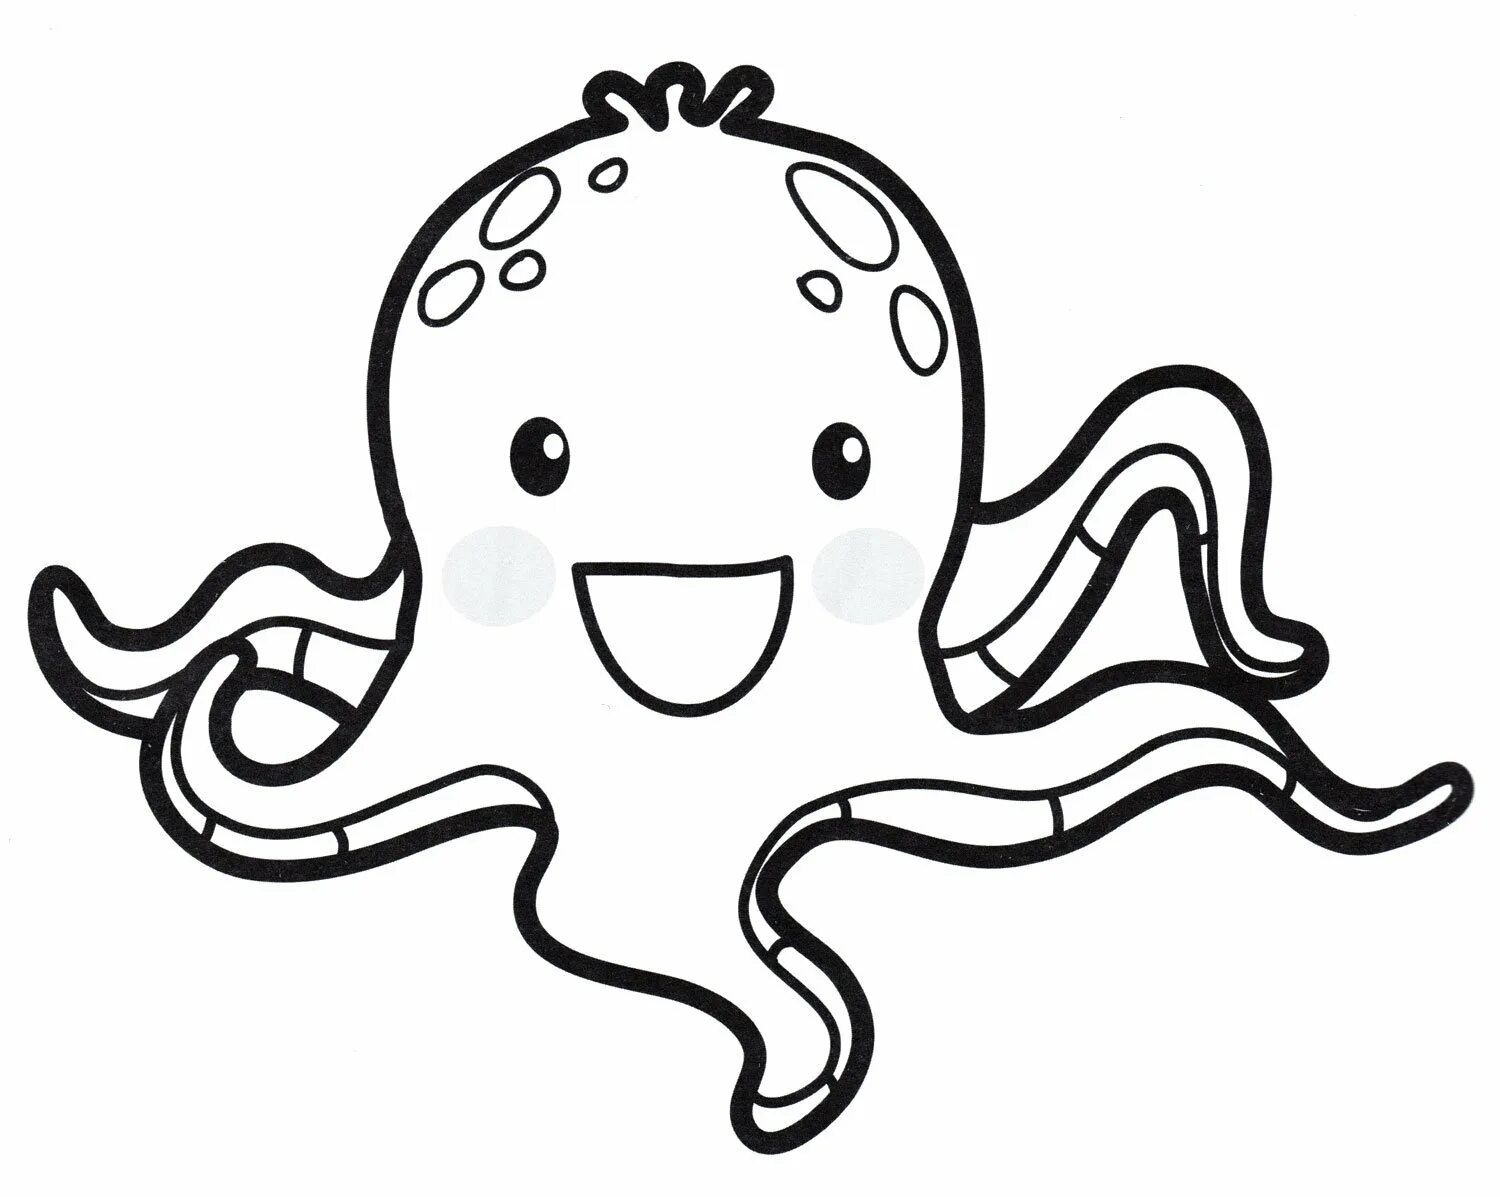 Glamorous octopus coloring book for preschoolers